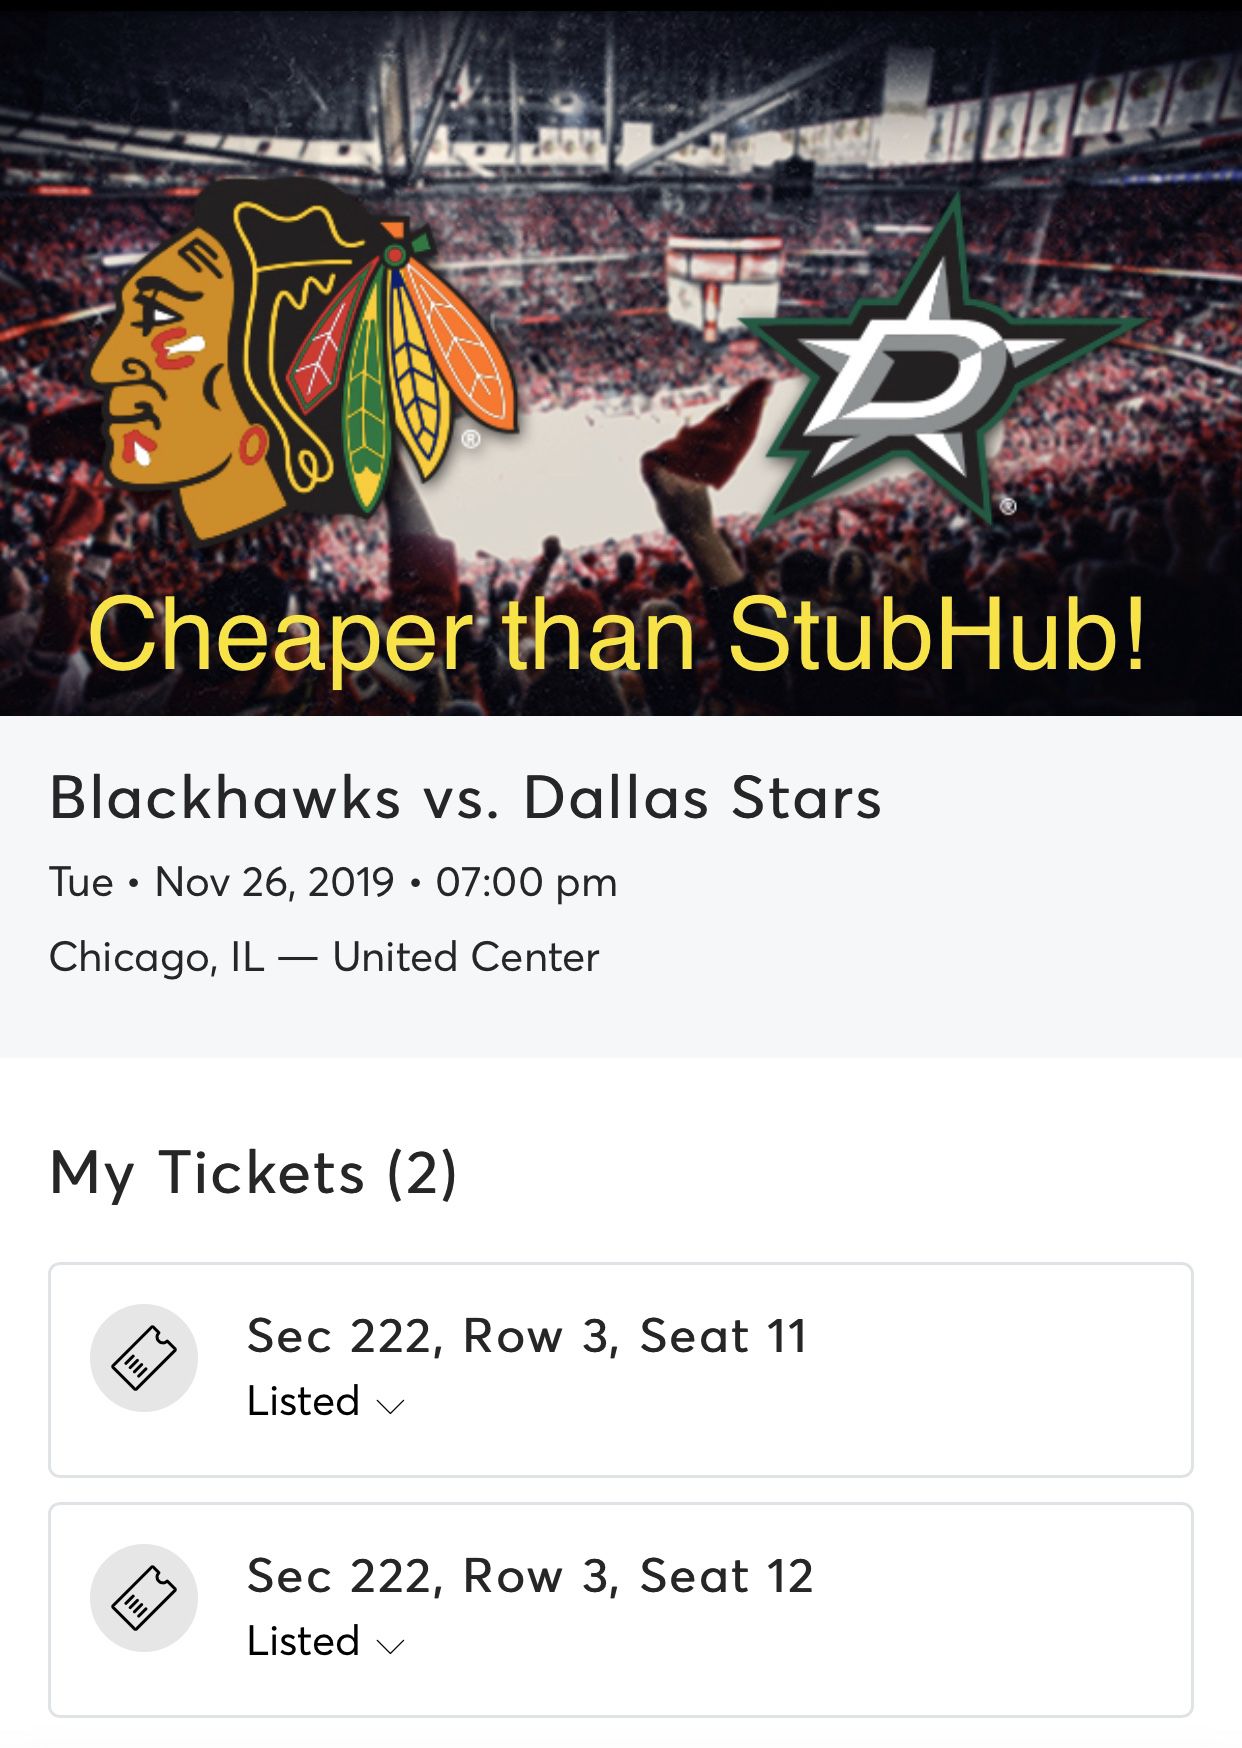 Tomorrow - Blackhawks vs. Dallas Stars - 2 Club Level Tickets